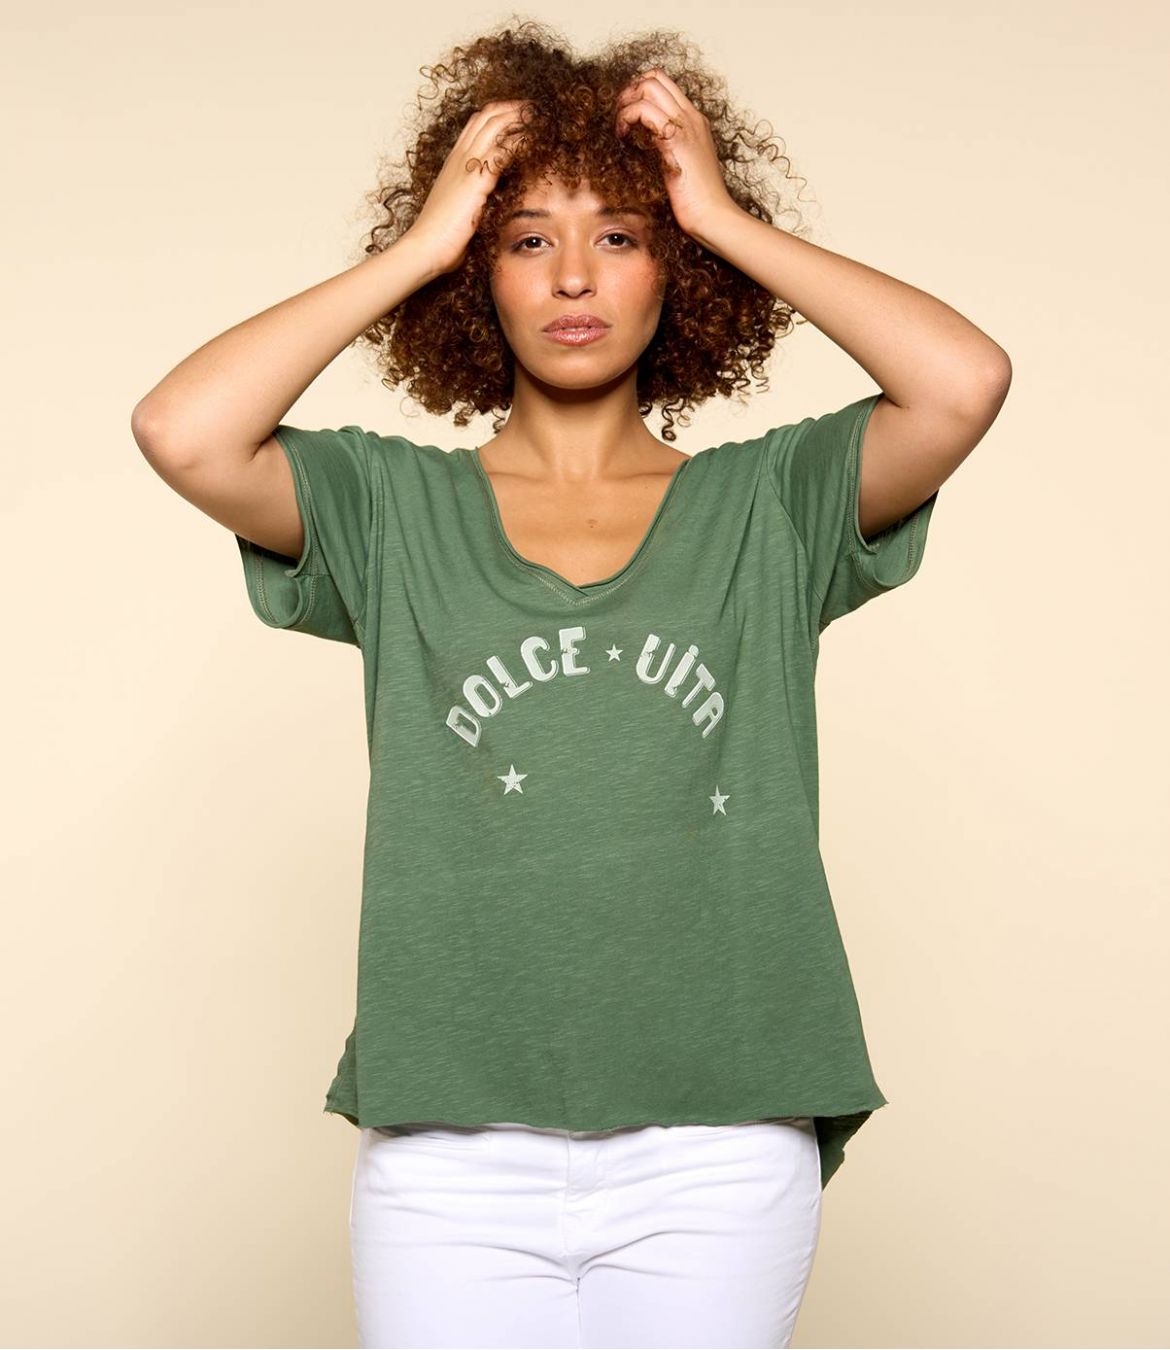 VITA KAKI C T-shirt en Coton bio pour Femme - 2